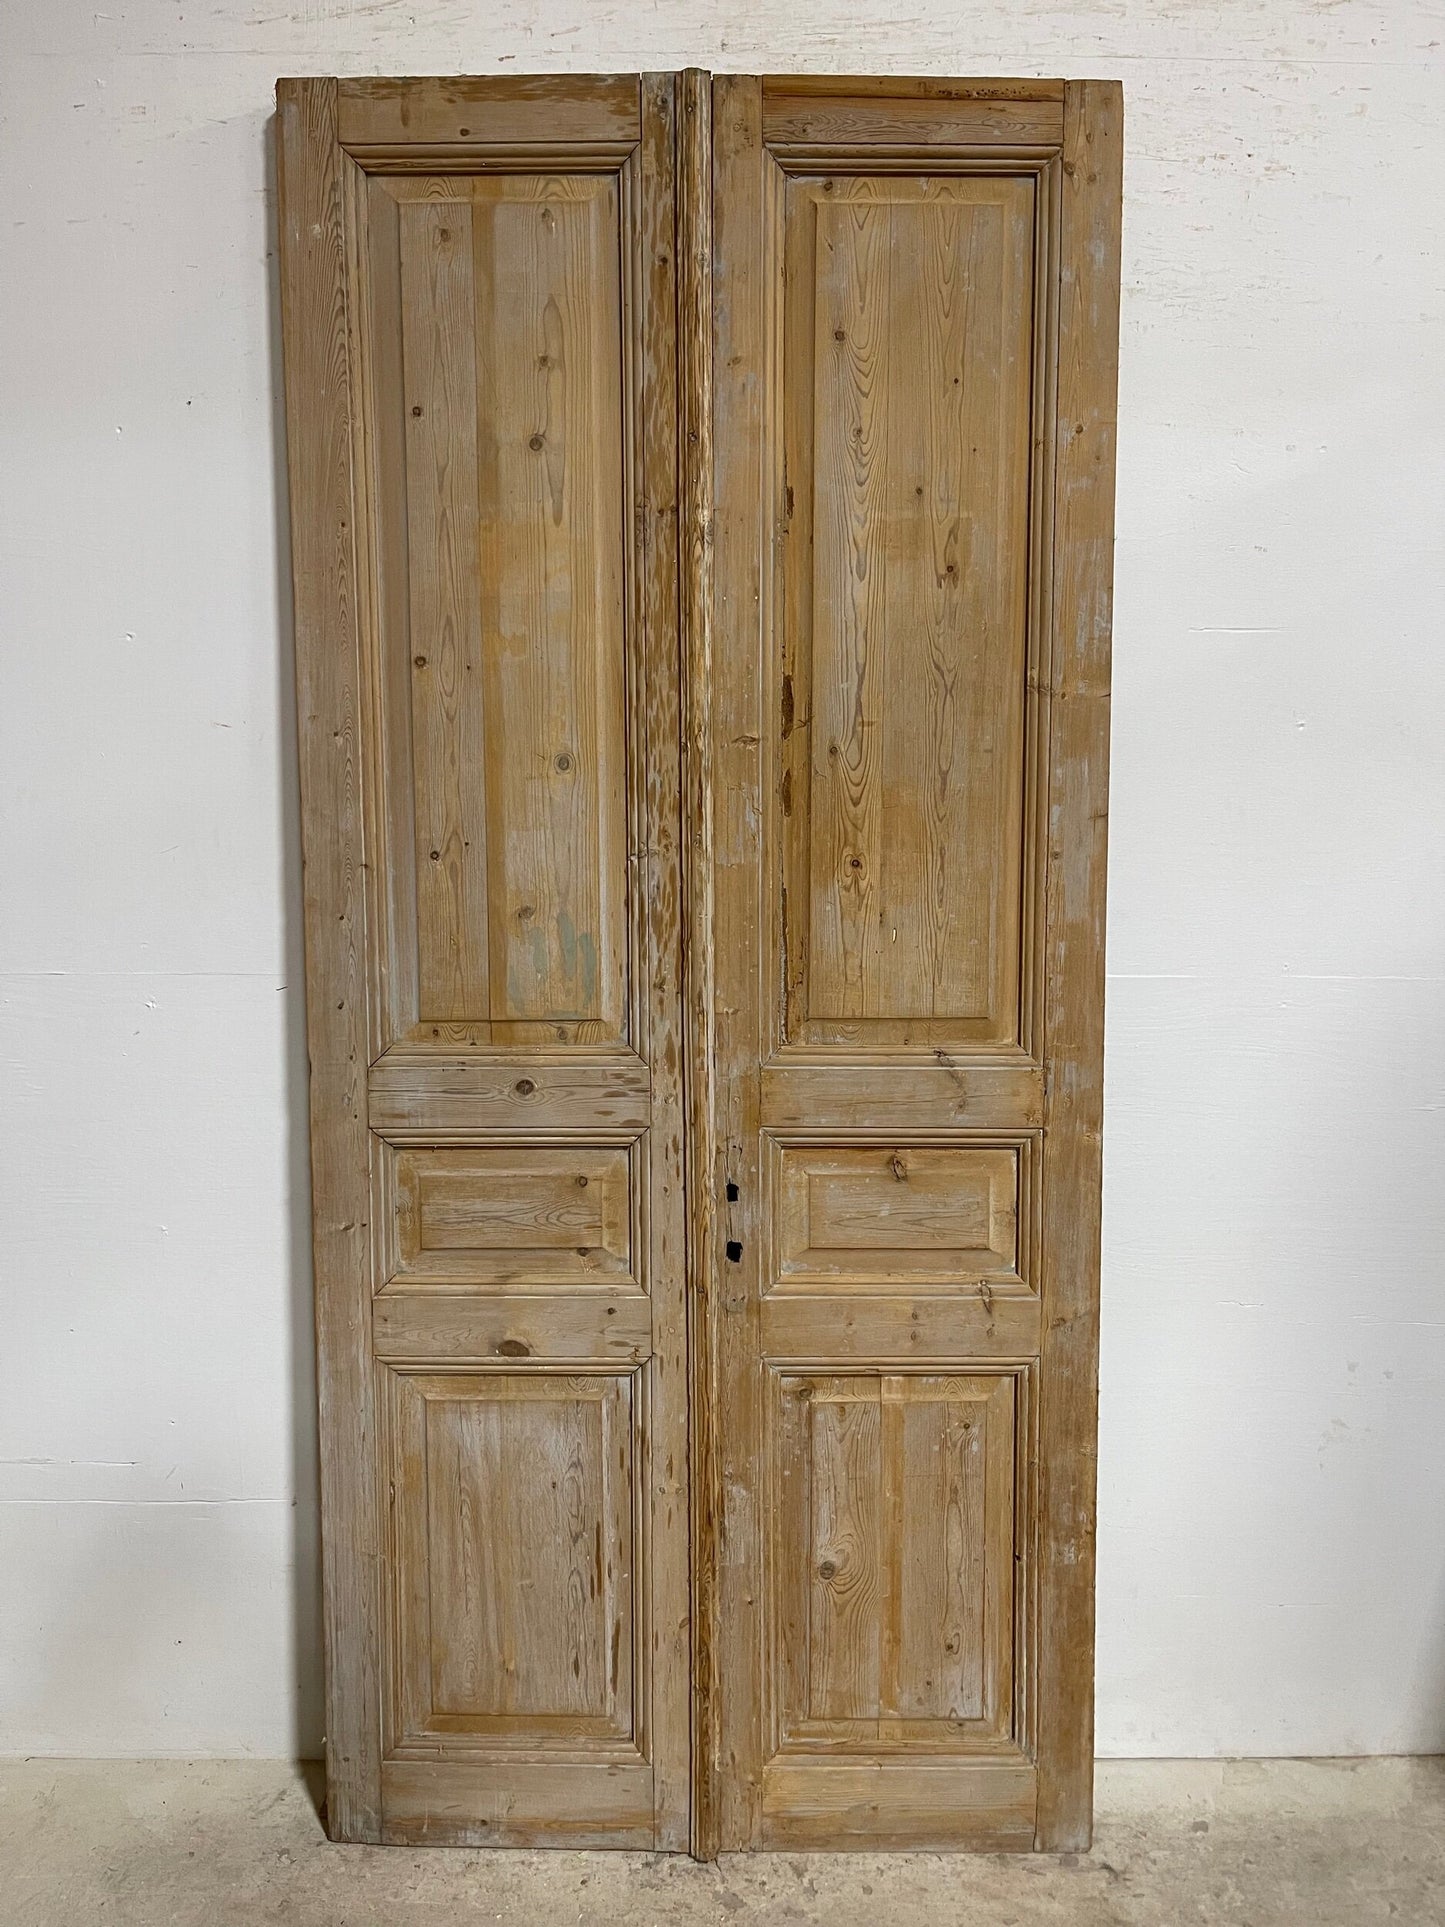 Antique french panel doors (94 x 42.75) I100